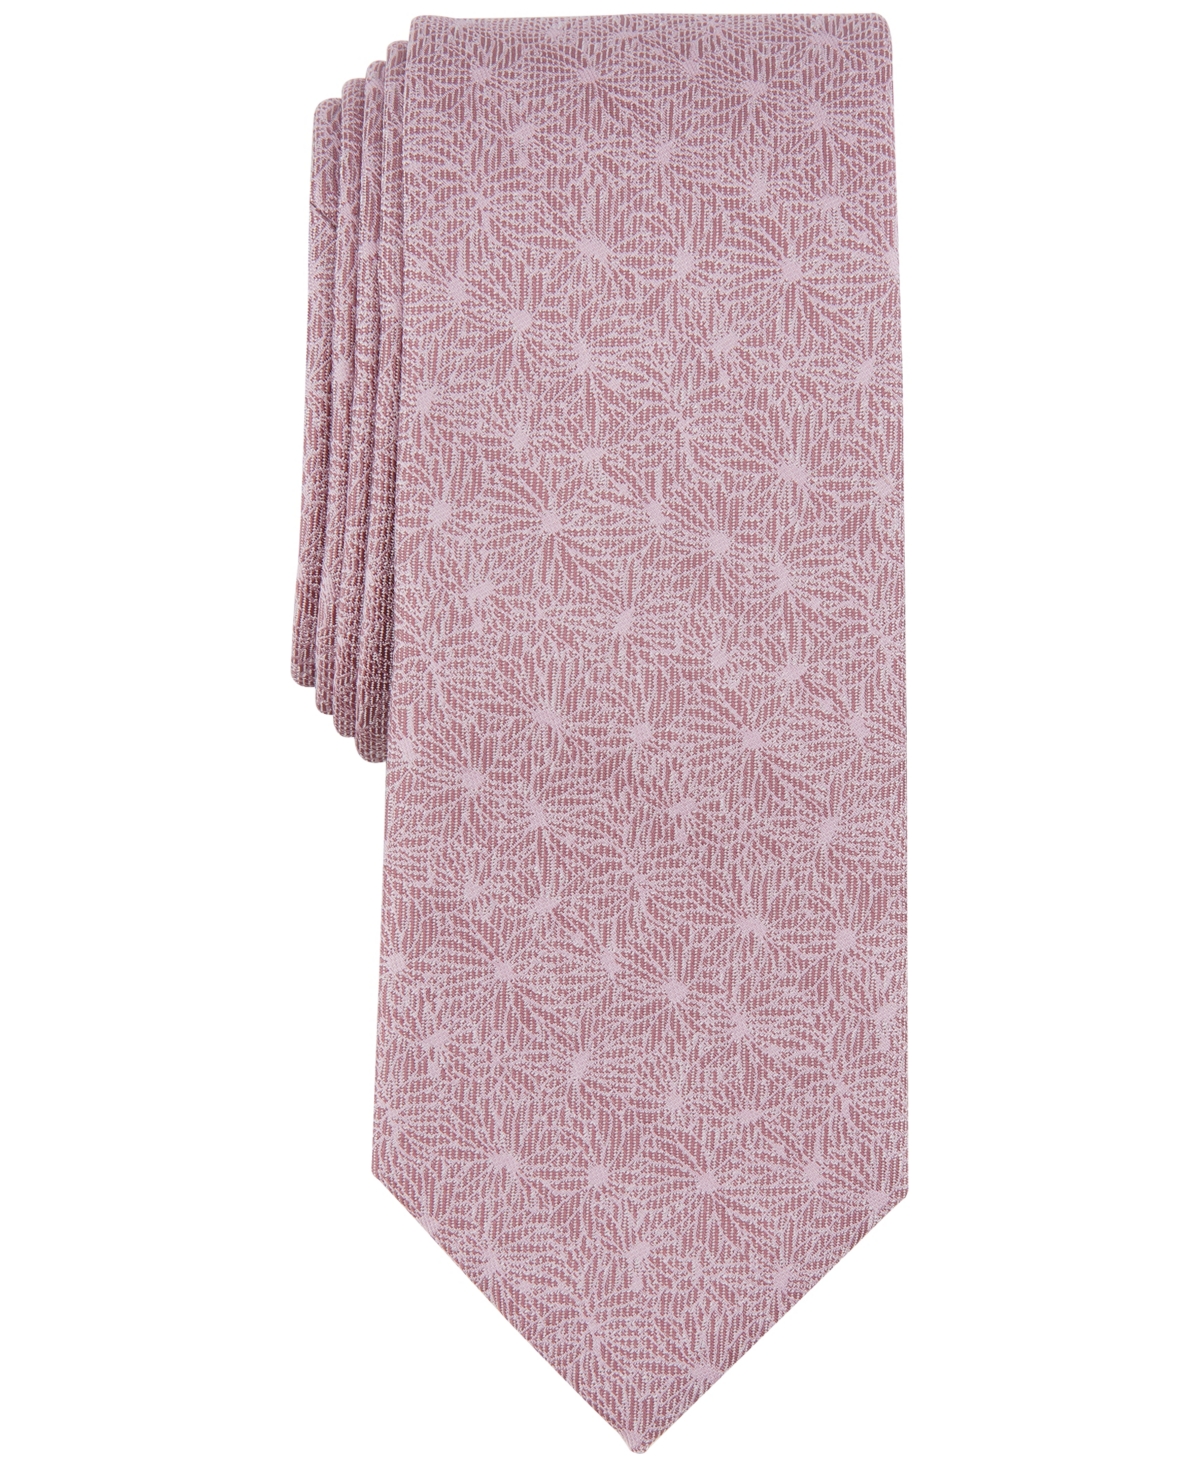 Bar Iii Men's Capri Floral Tie, Created for Macy's